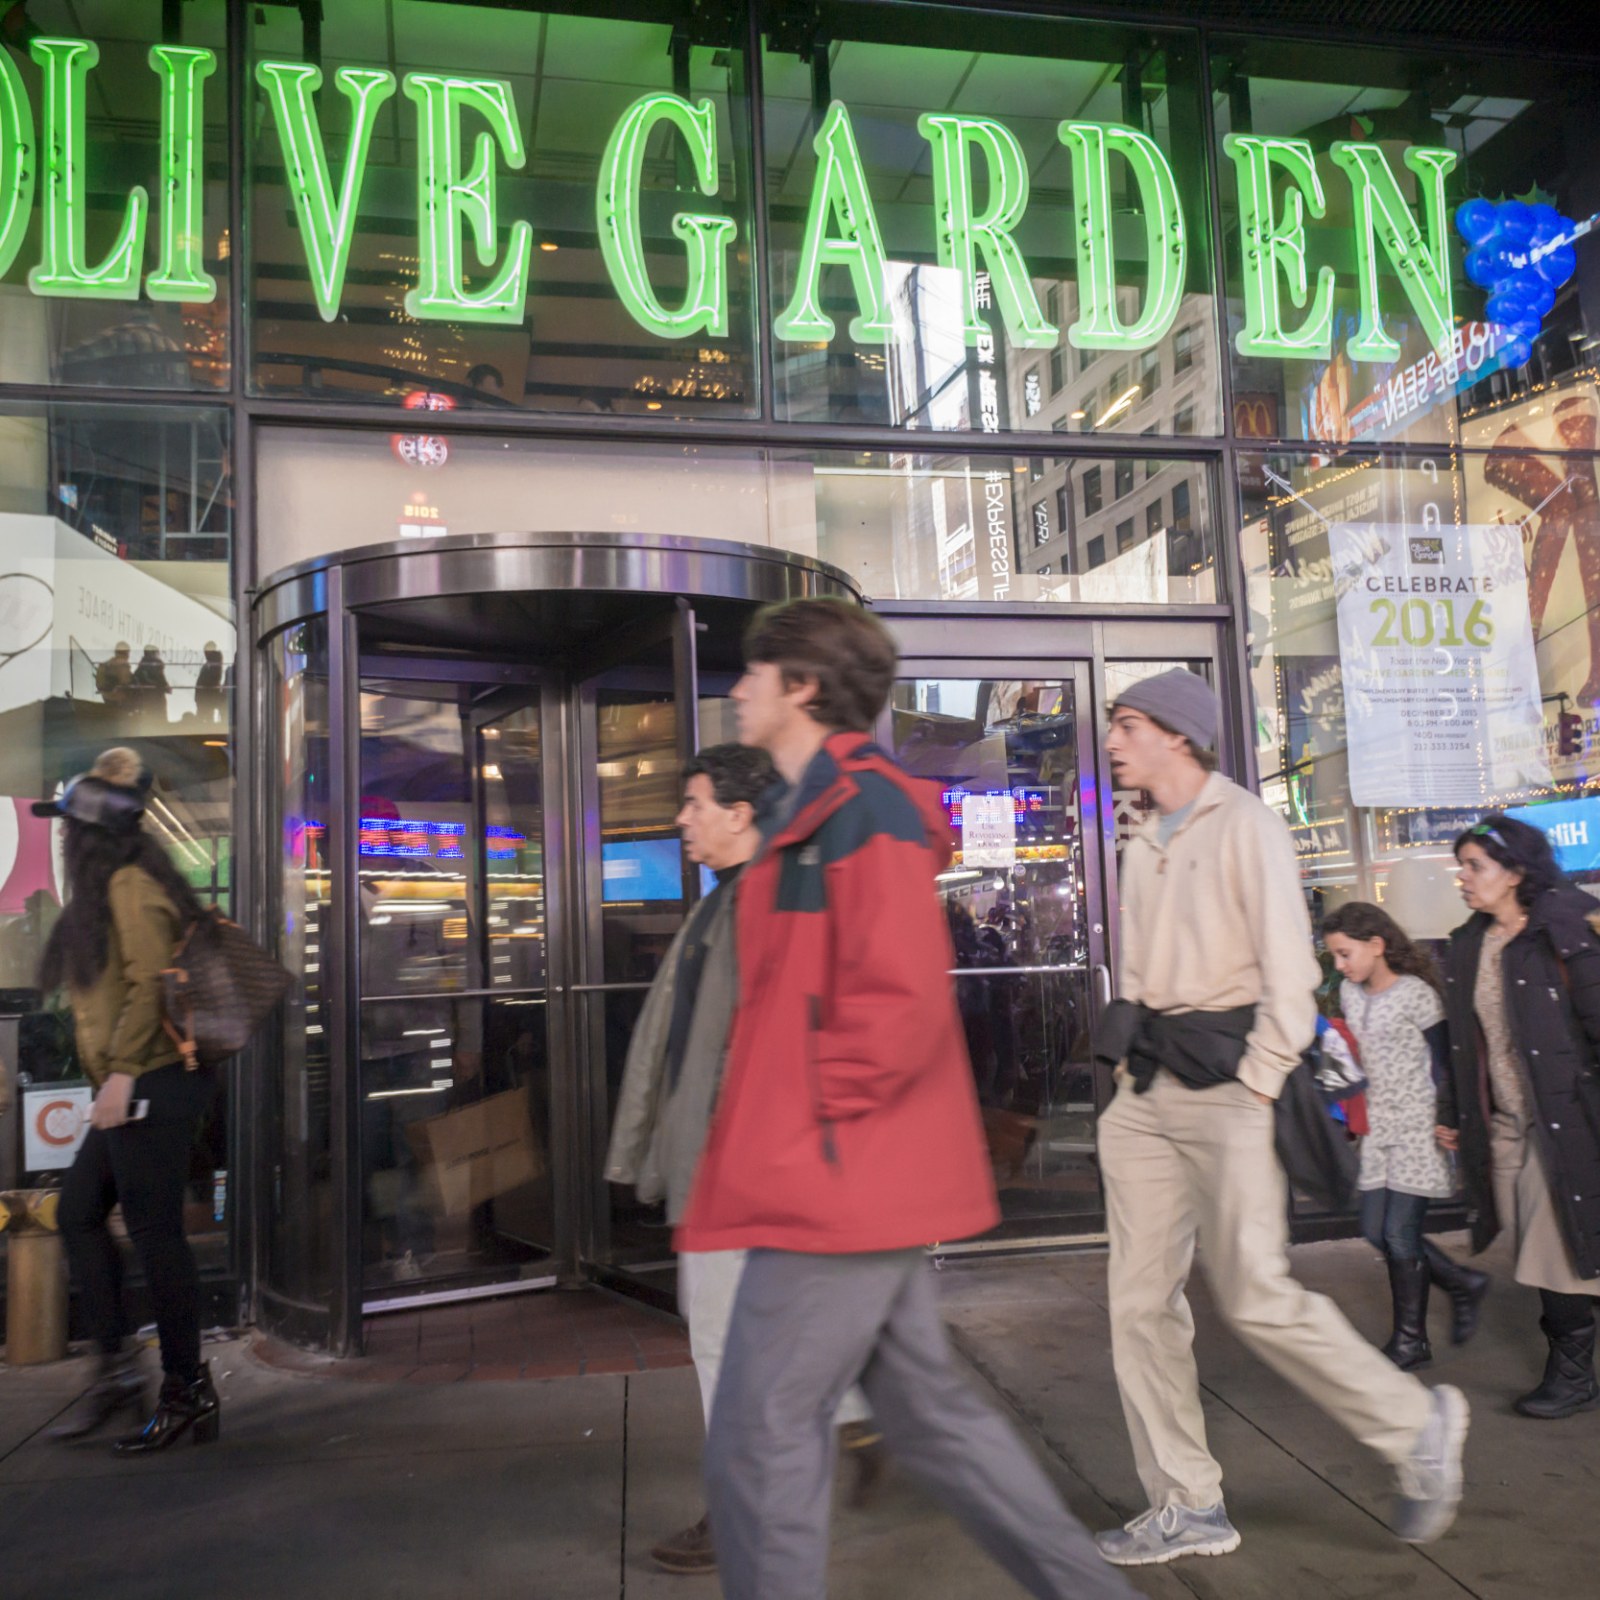 Olive Garden Manager Who Allegedly Let White Diner Refuse Service